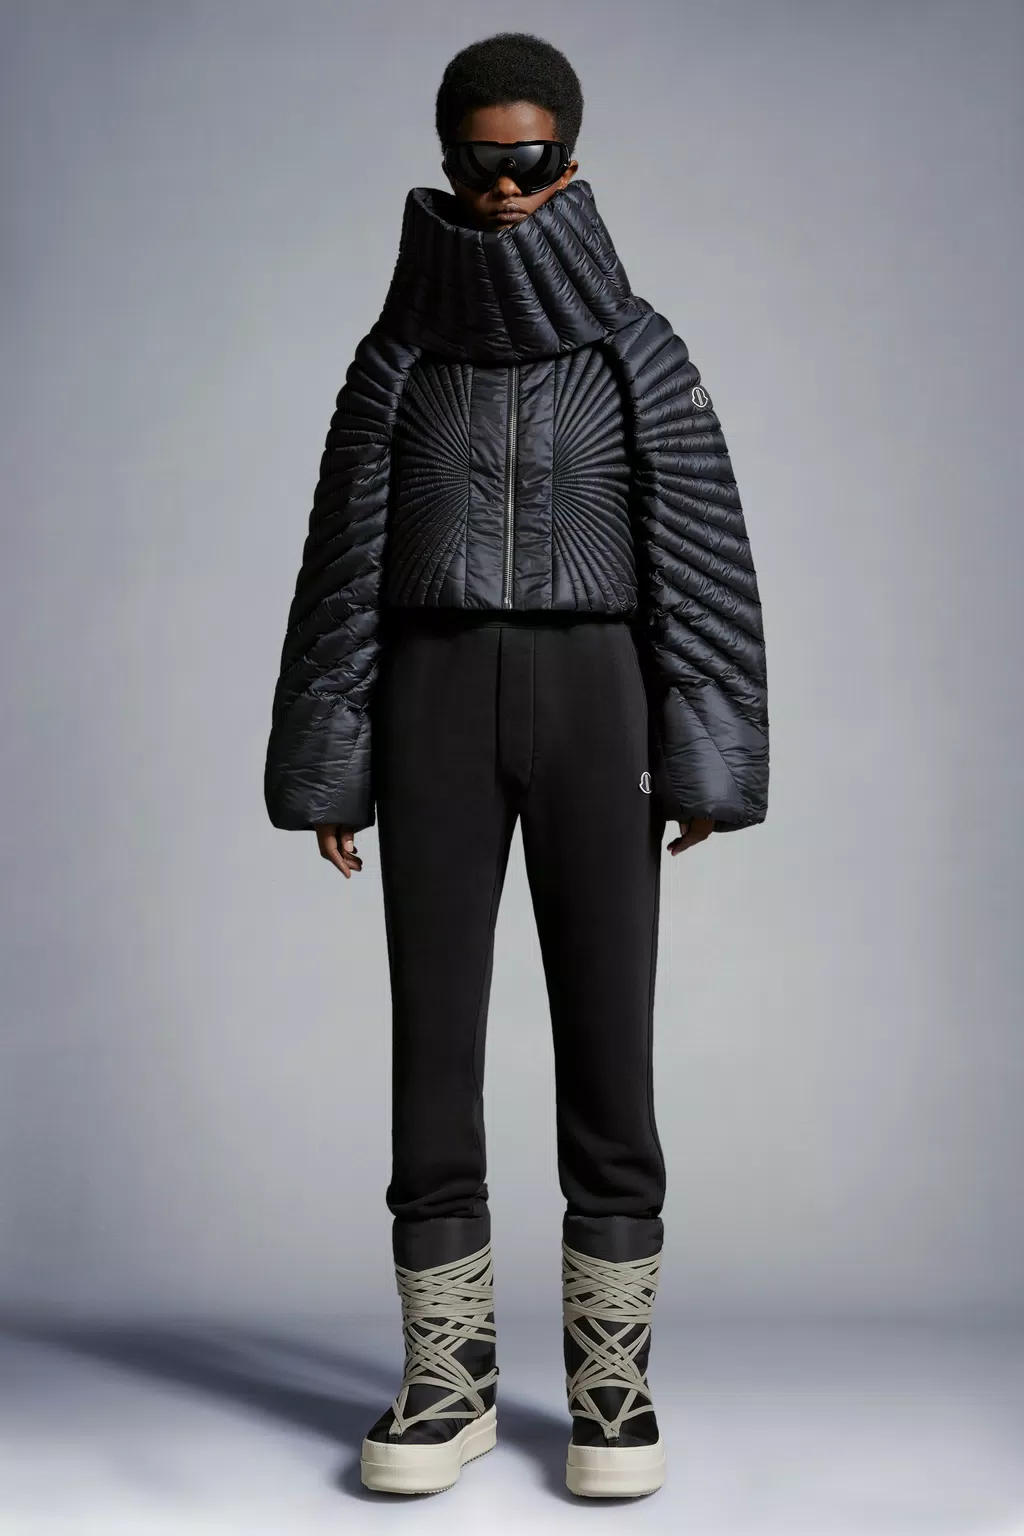 Radiance Convertible 쇼트 다운 재킷 젠더 뉴트럴 블랙 Moncler 1